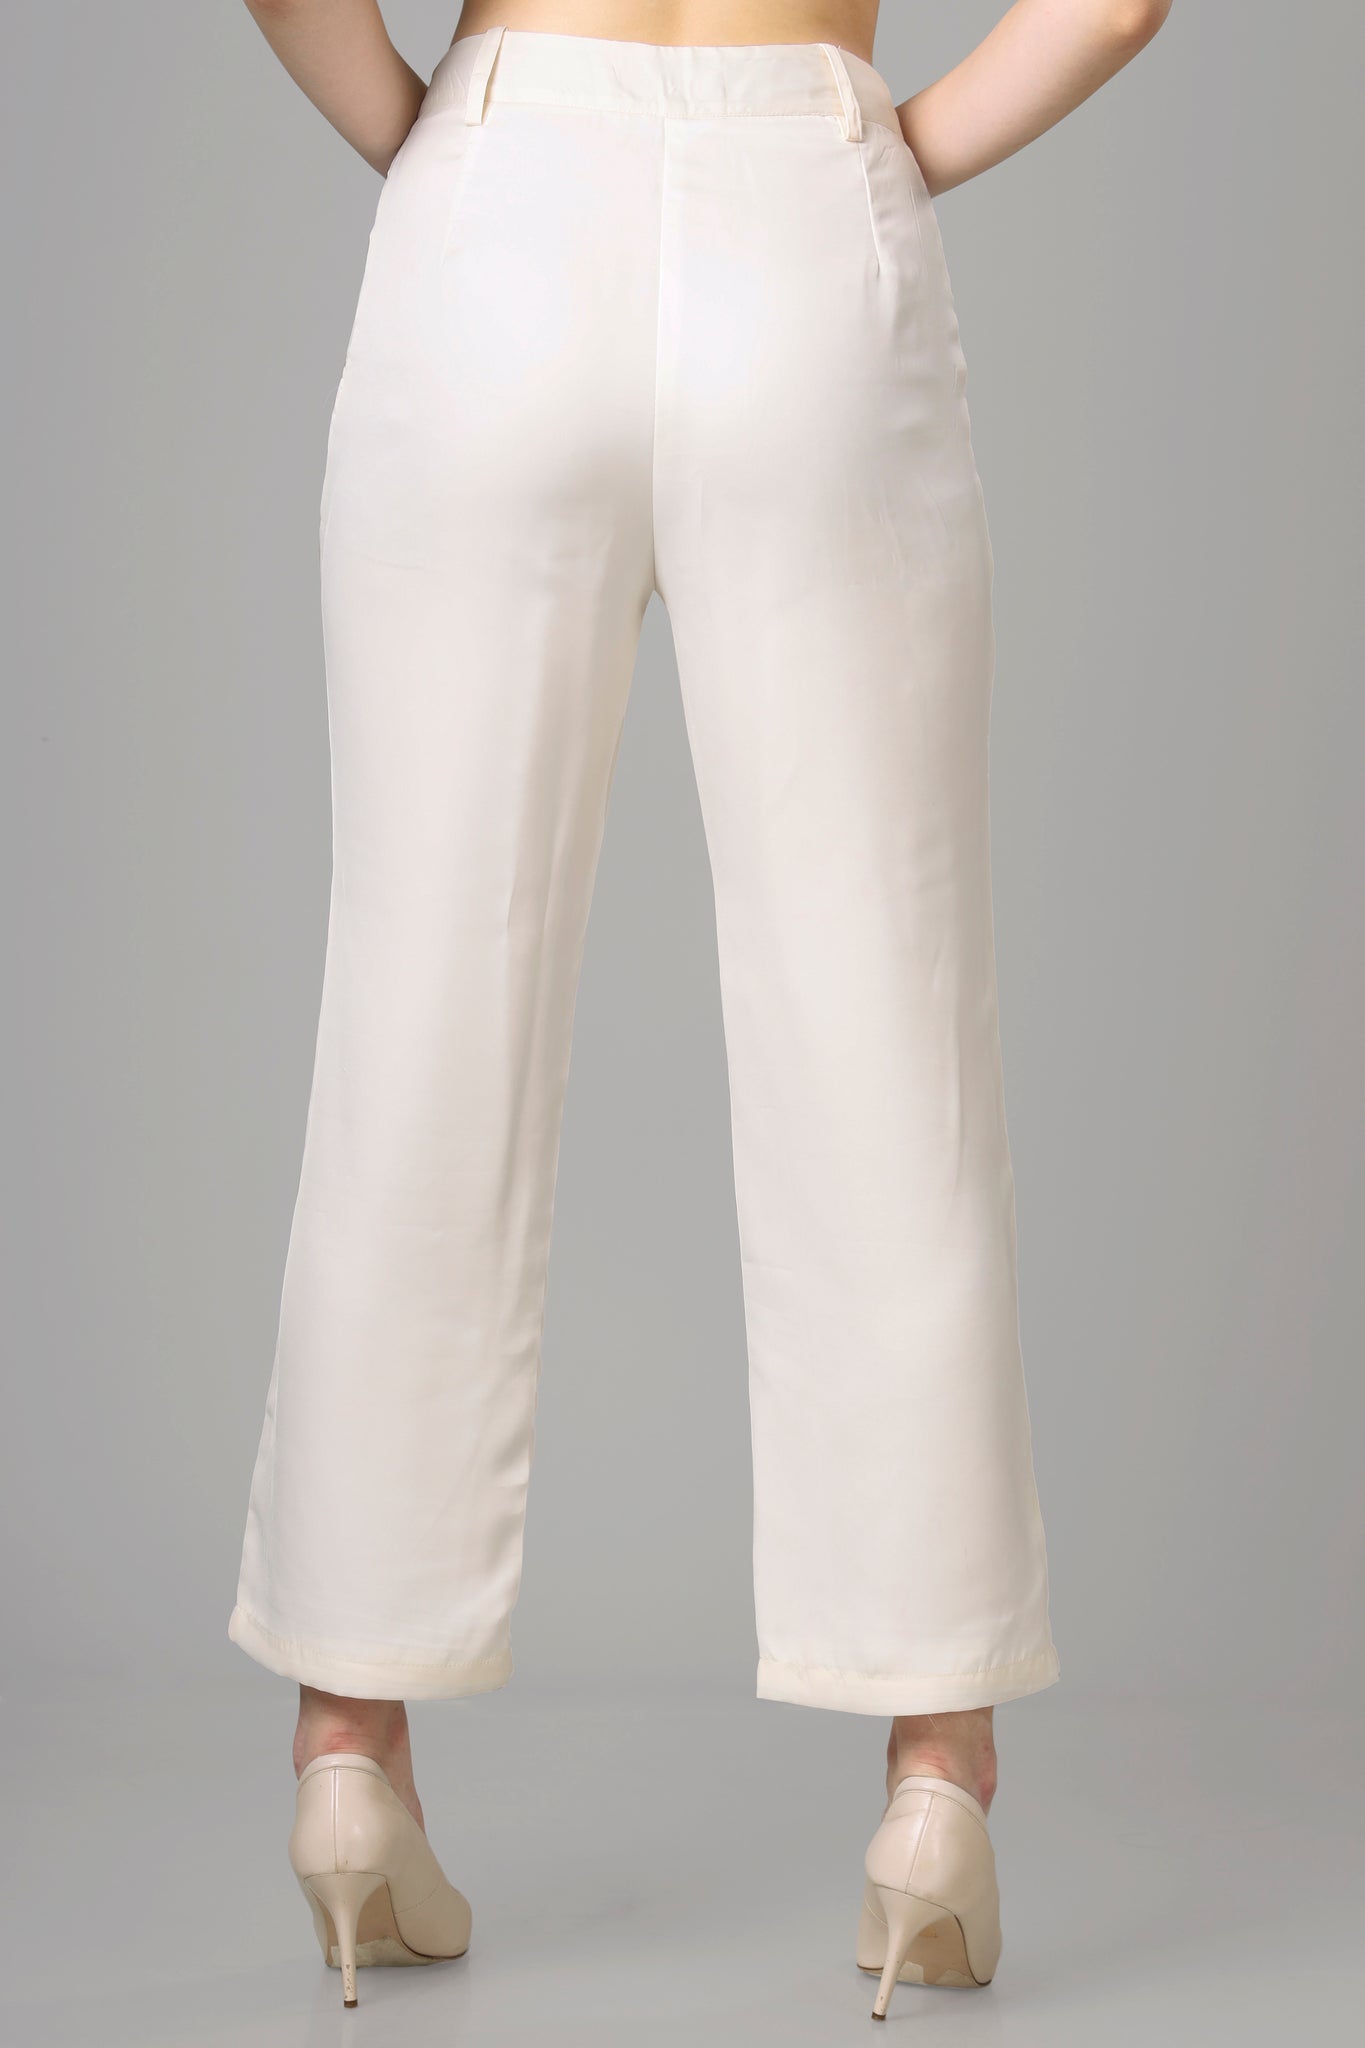 Classic White Women's Trousers